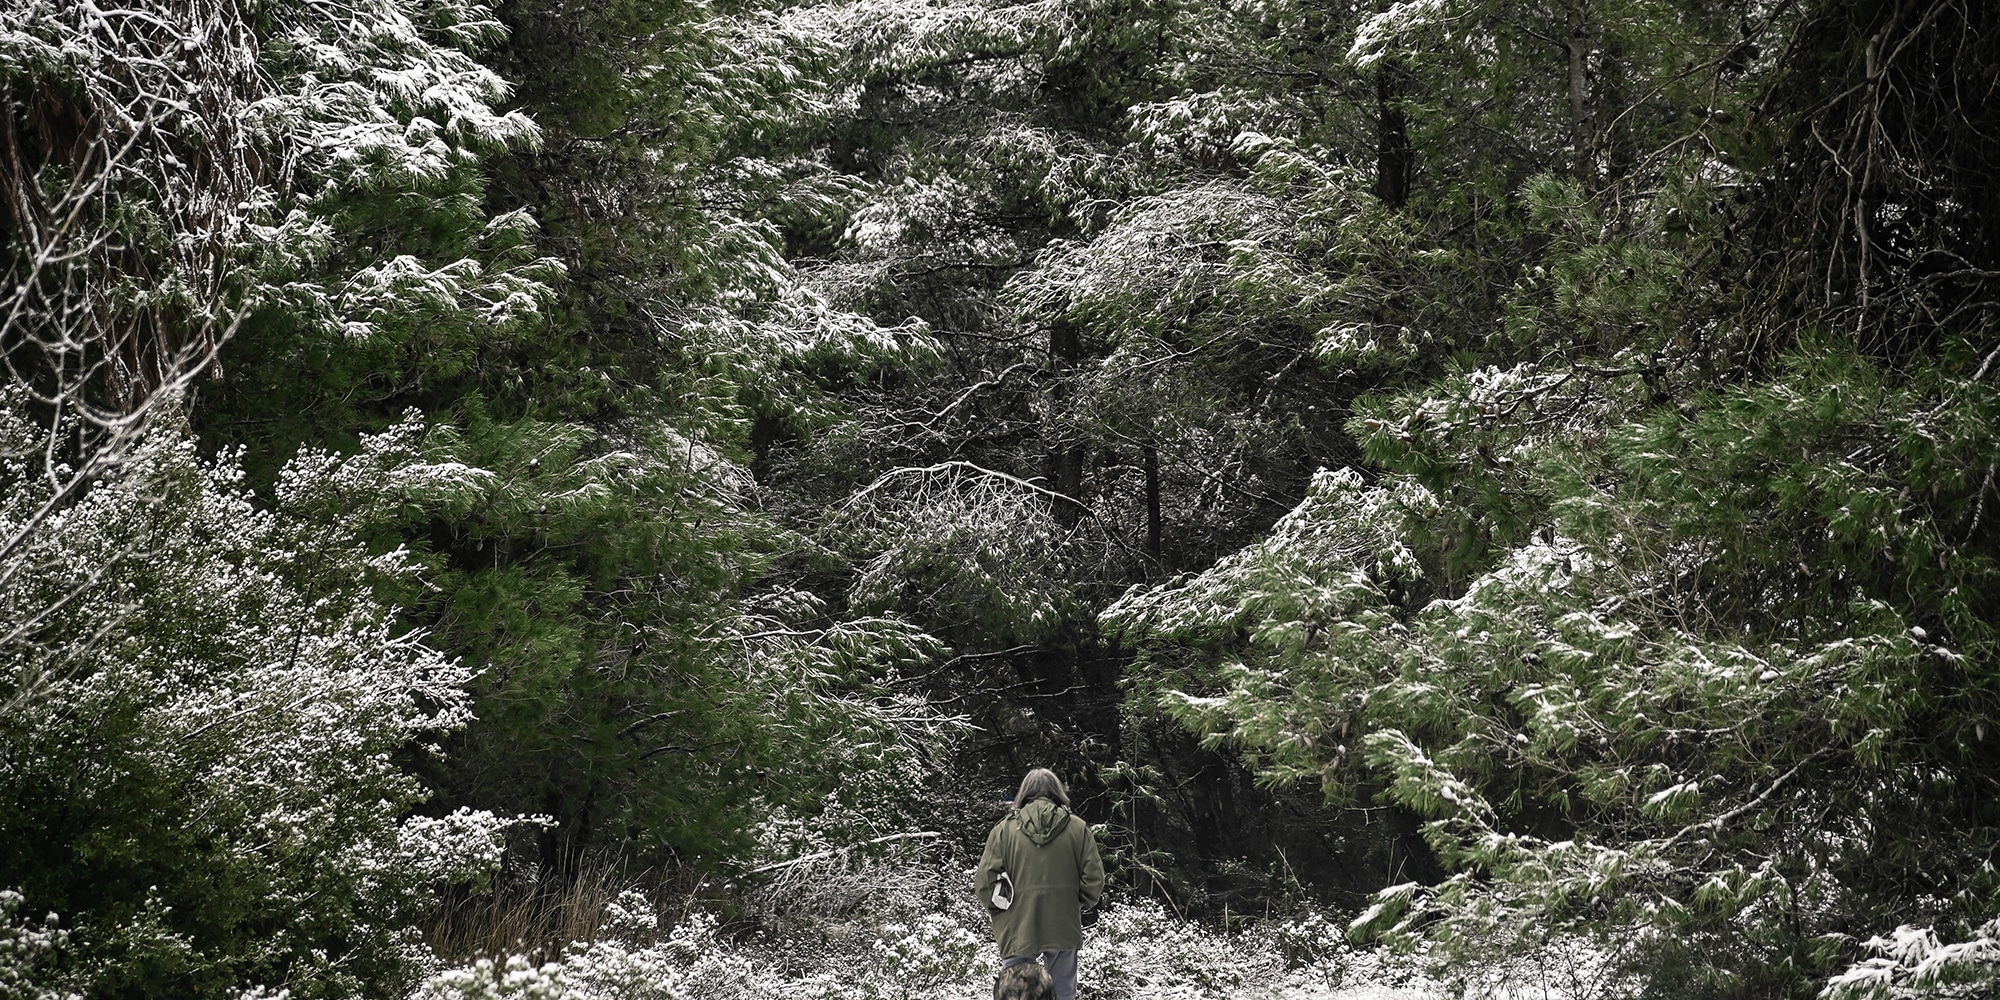 xionia stin attiki - Κακοκαιρία Ελπίς: Στα «λευκά» και η Αττική (εικόνες)